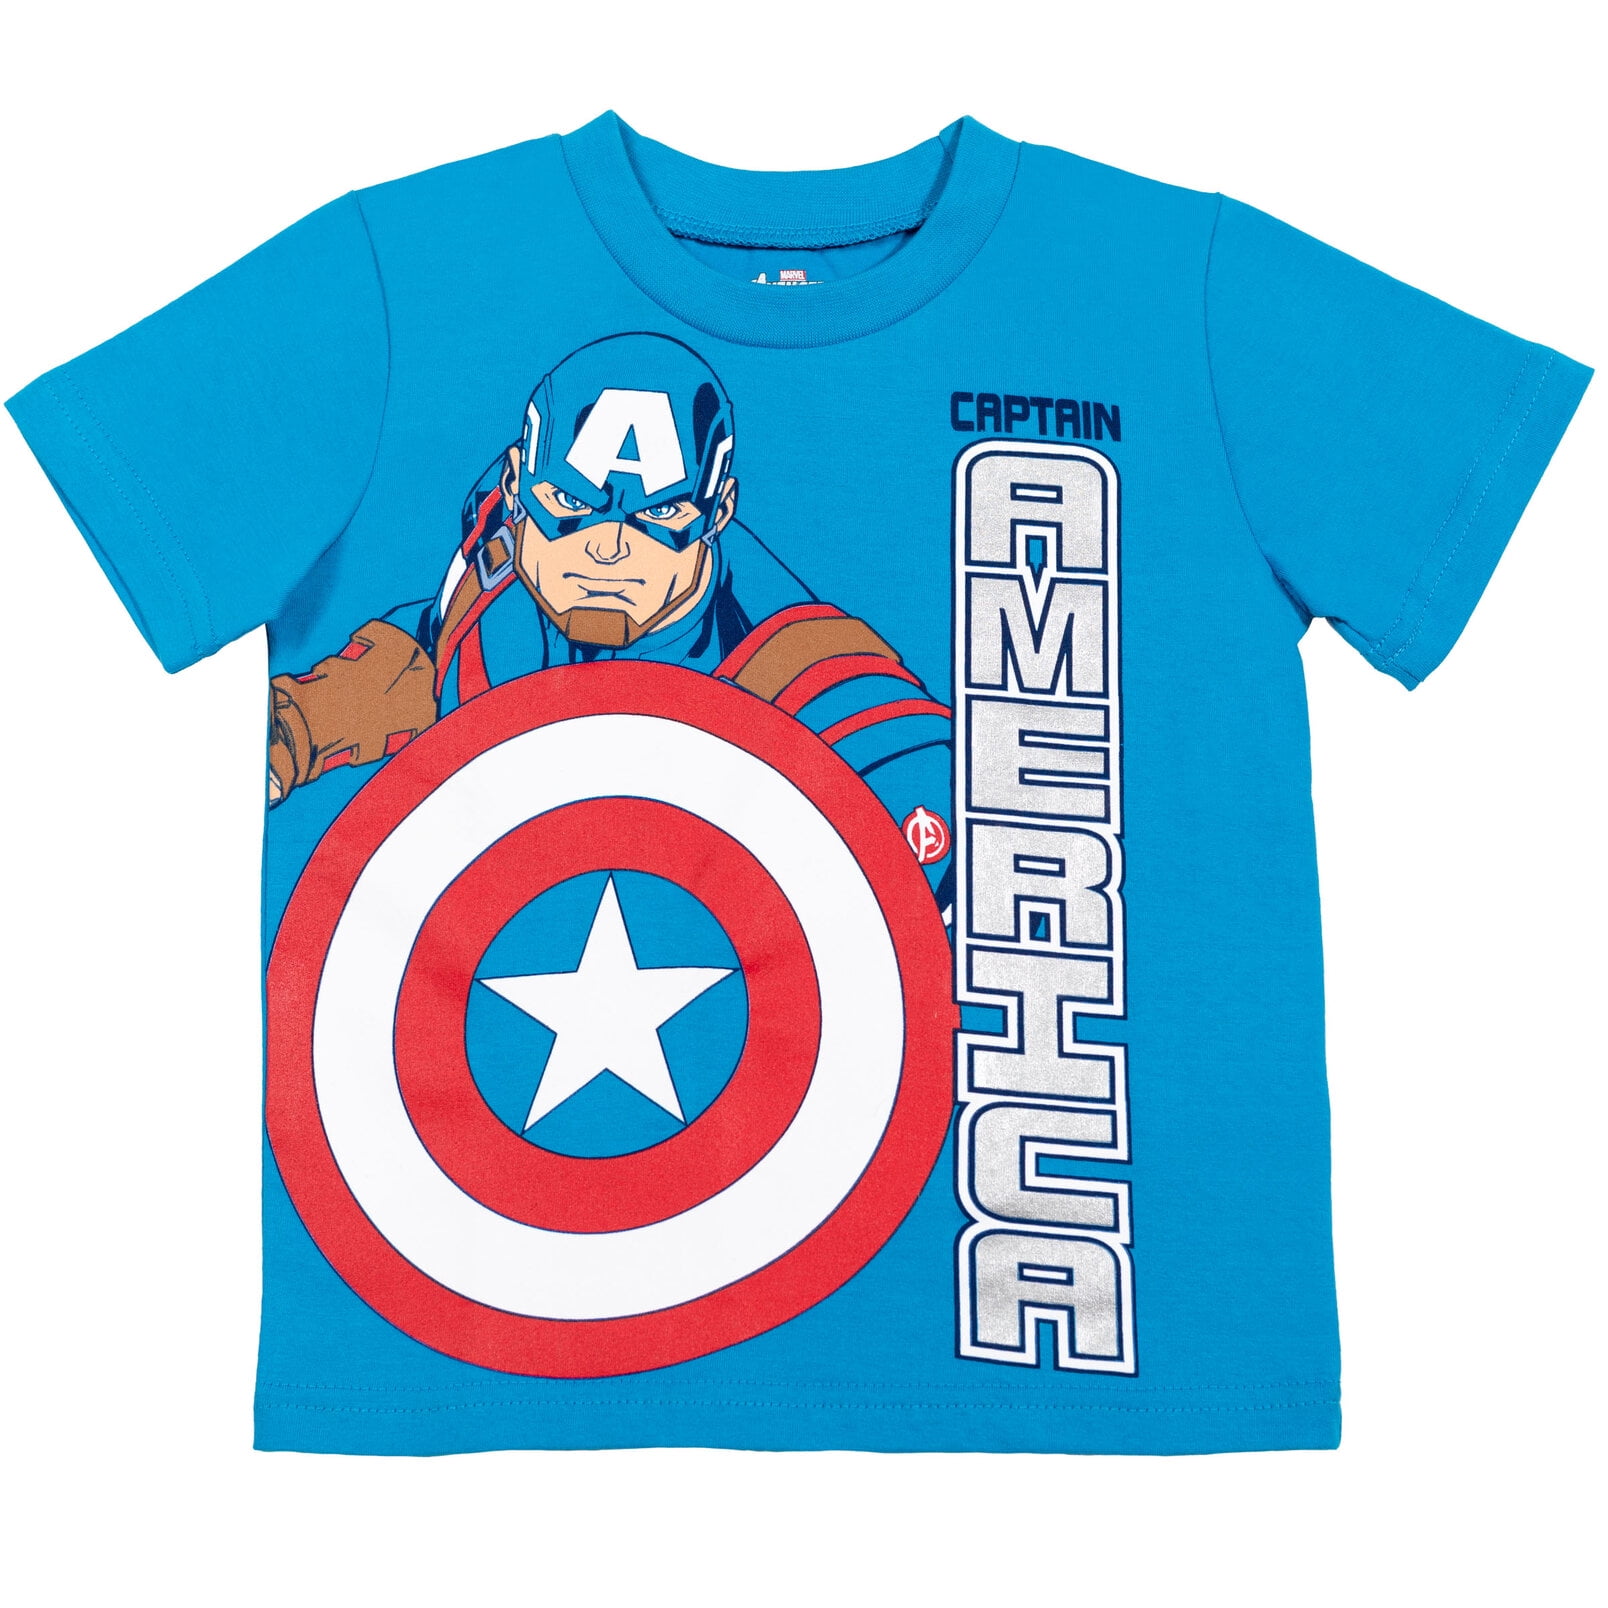 Marvel Avengers Black Panther Captain America Iron Man Toddler Boys 4 Pack Graphic T-Shirts Avengers 2T Walmart.com